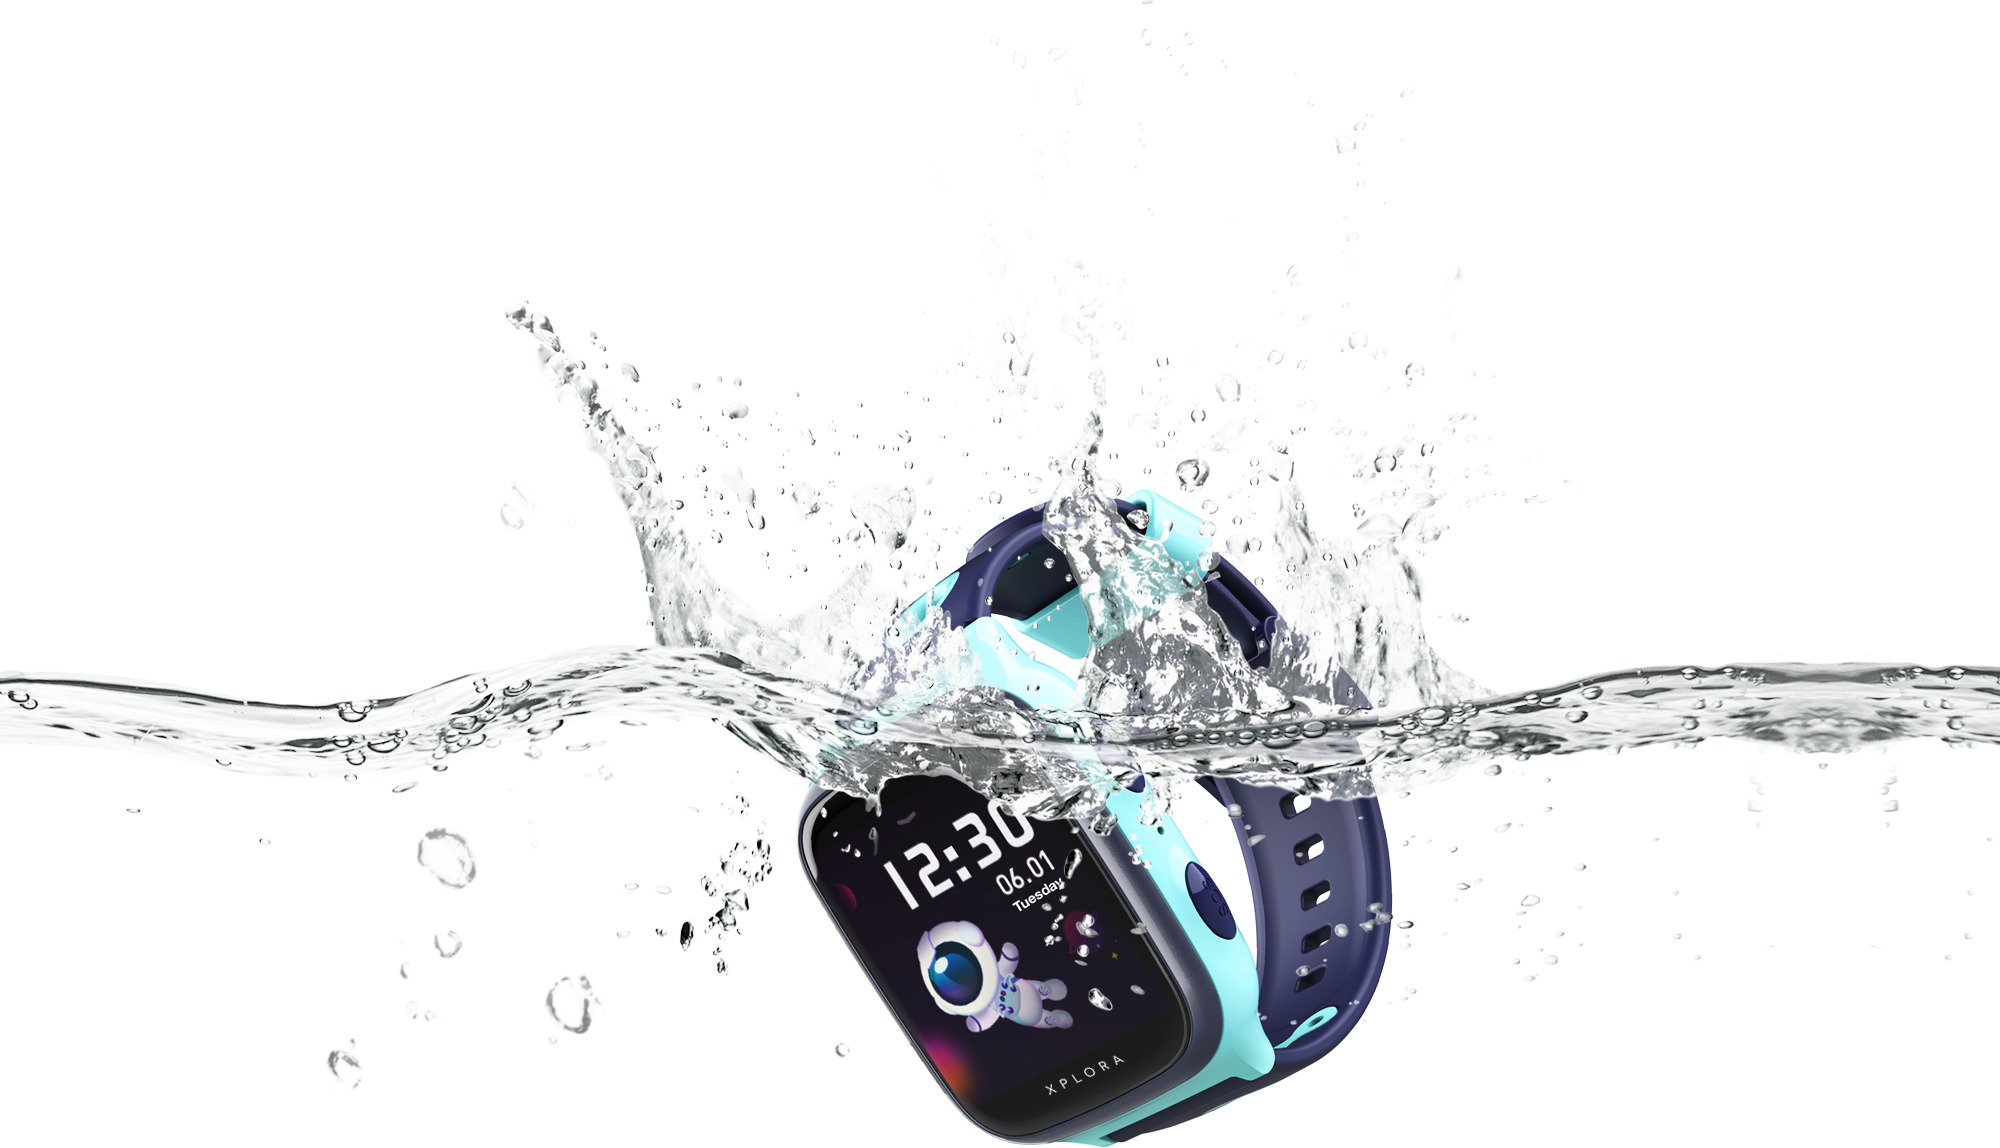 XPLORA X4 Kinder-Smartwatch mm, Silikon, Türkis 145-210